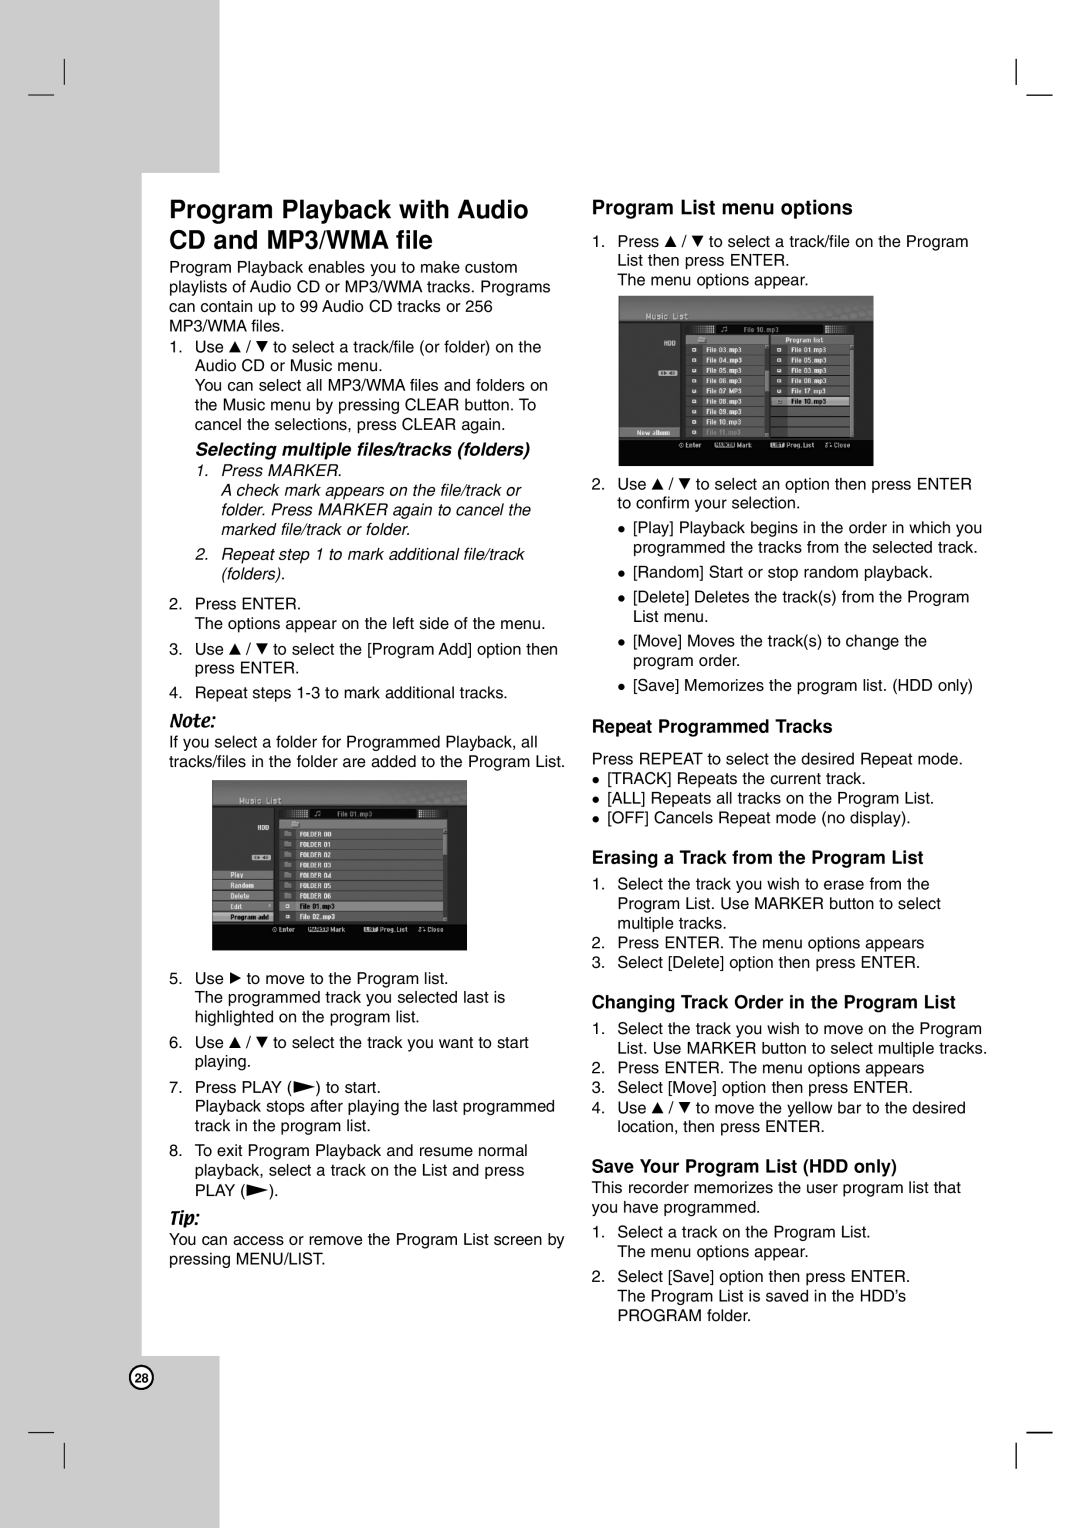 NEC NDH-81 Program Playback with Audio CD and MP3/WMA file, Program List menu options, Repeat Programmed Tracks 